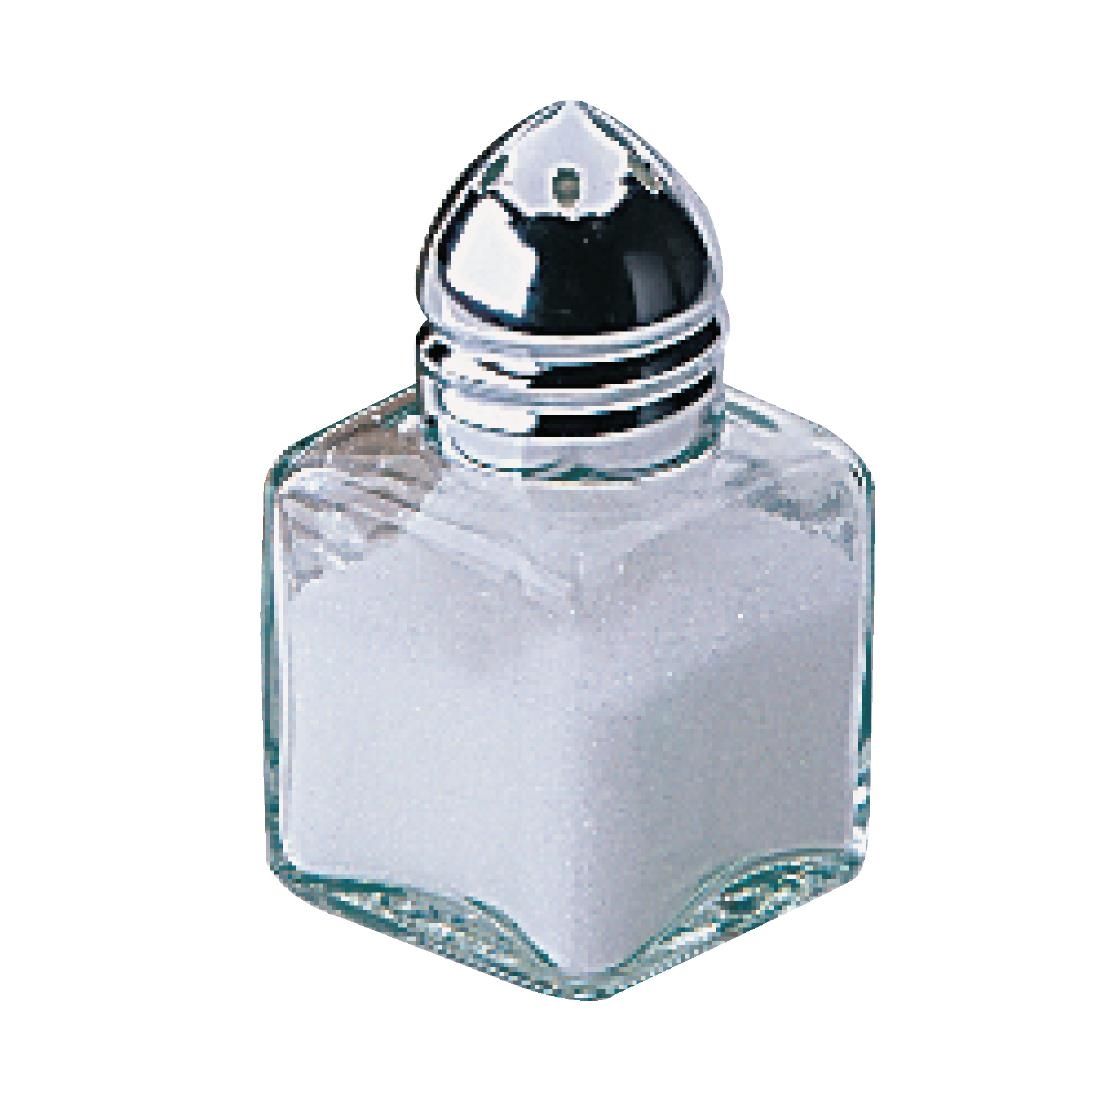 CE328 Room Service Salt/Pepper Shaker (Pack of 12)